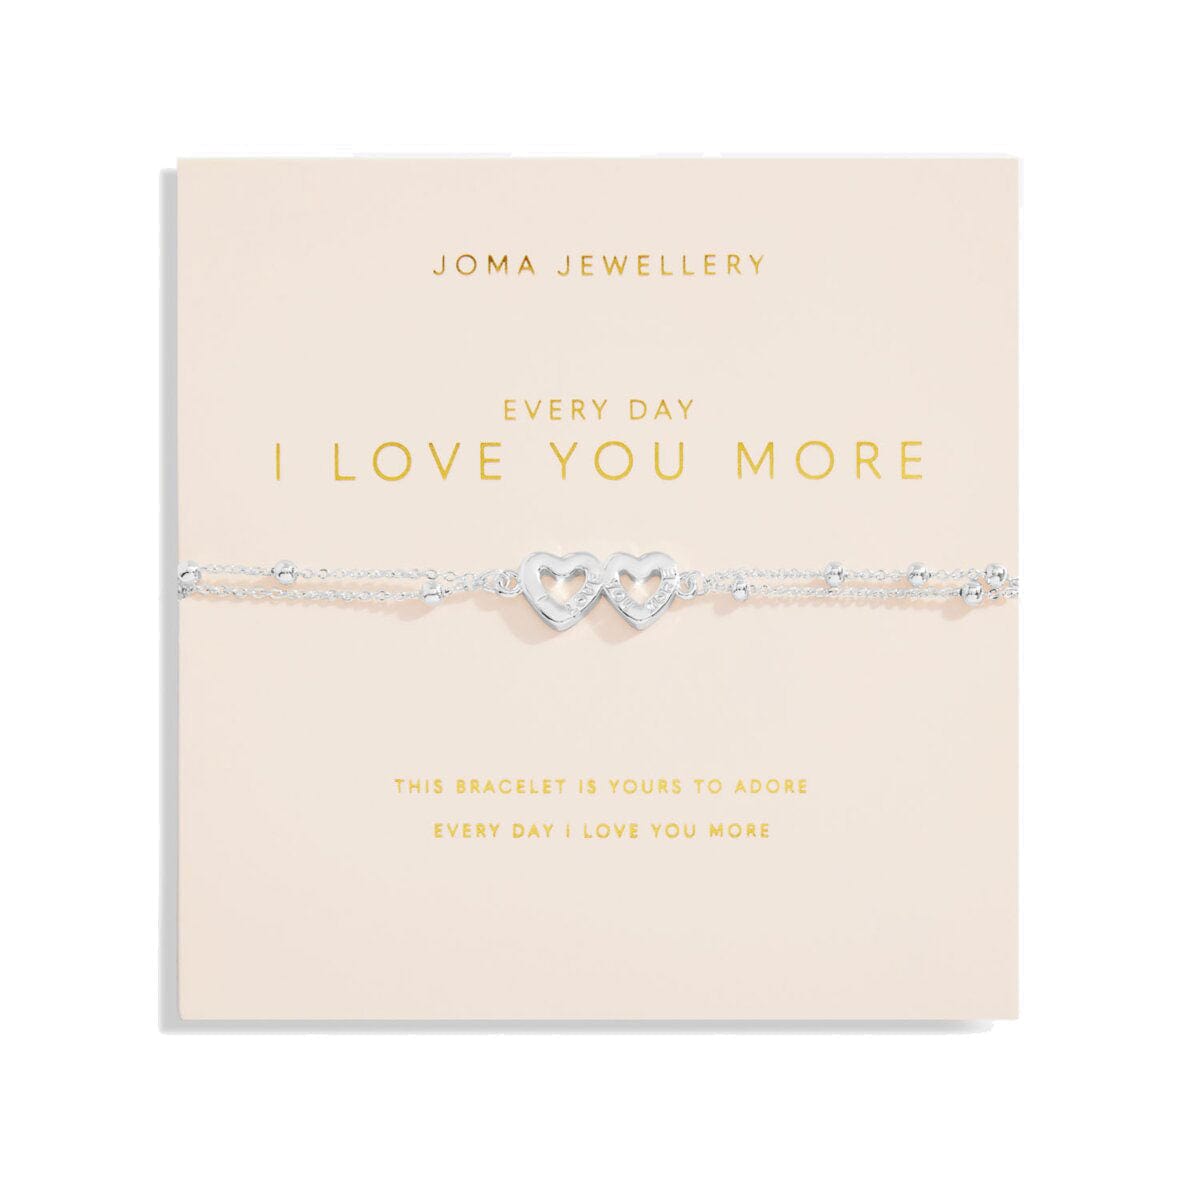 Joma Jewellery Bracelets Joma Jewellery Forever Yours Bracelet - Every Day I Love You More